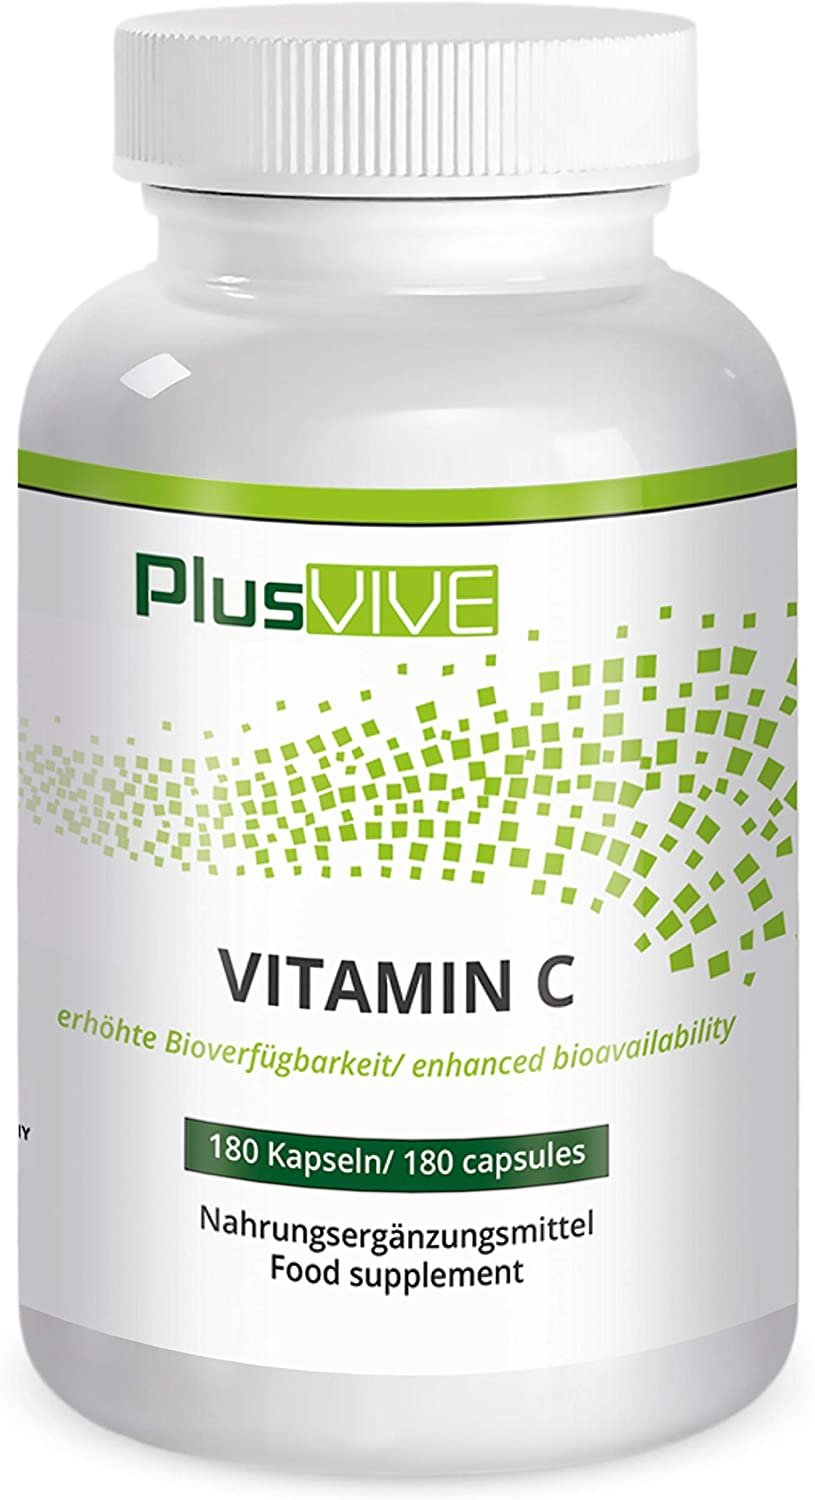 5. Plusvive natural Vitamin C with bioflavonoids